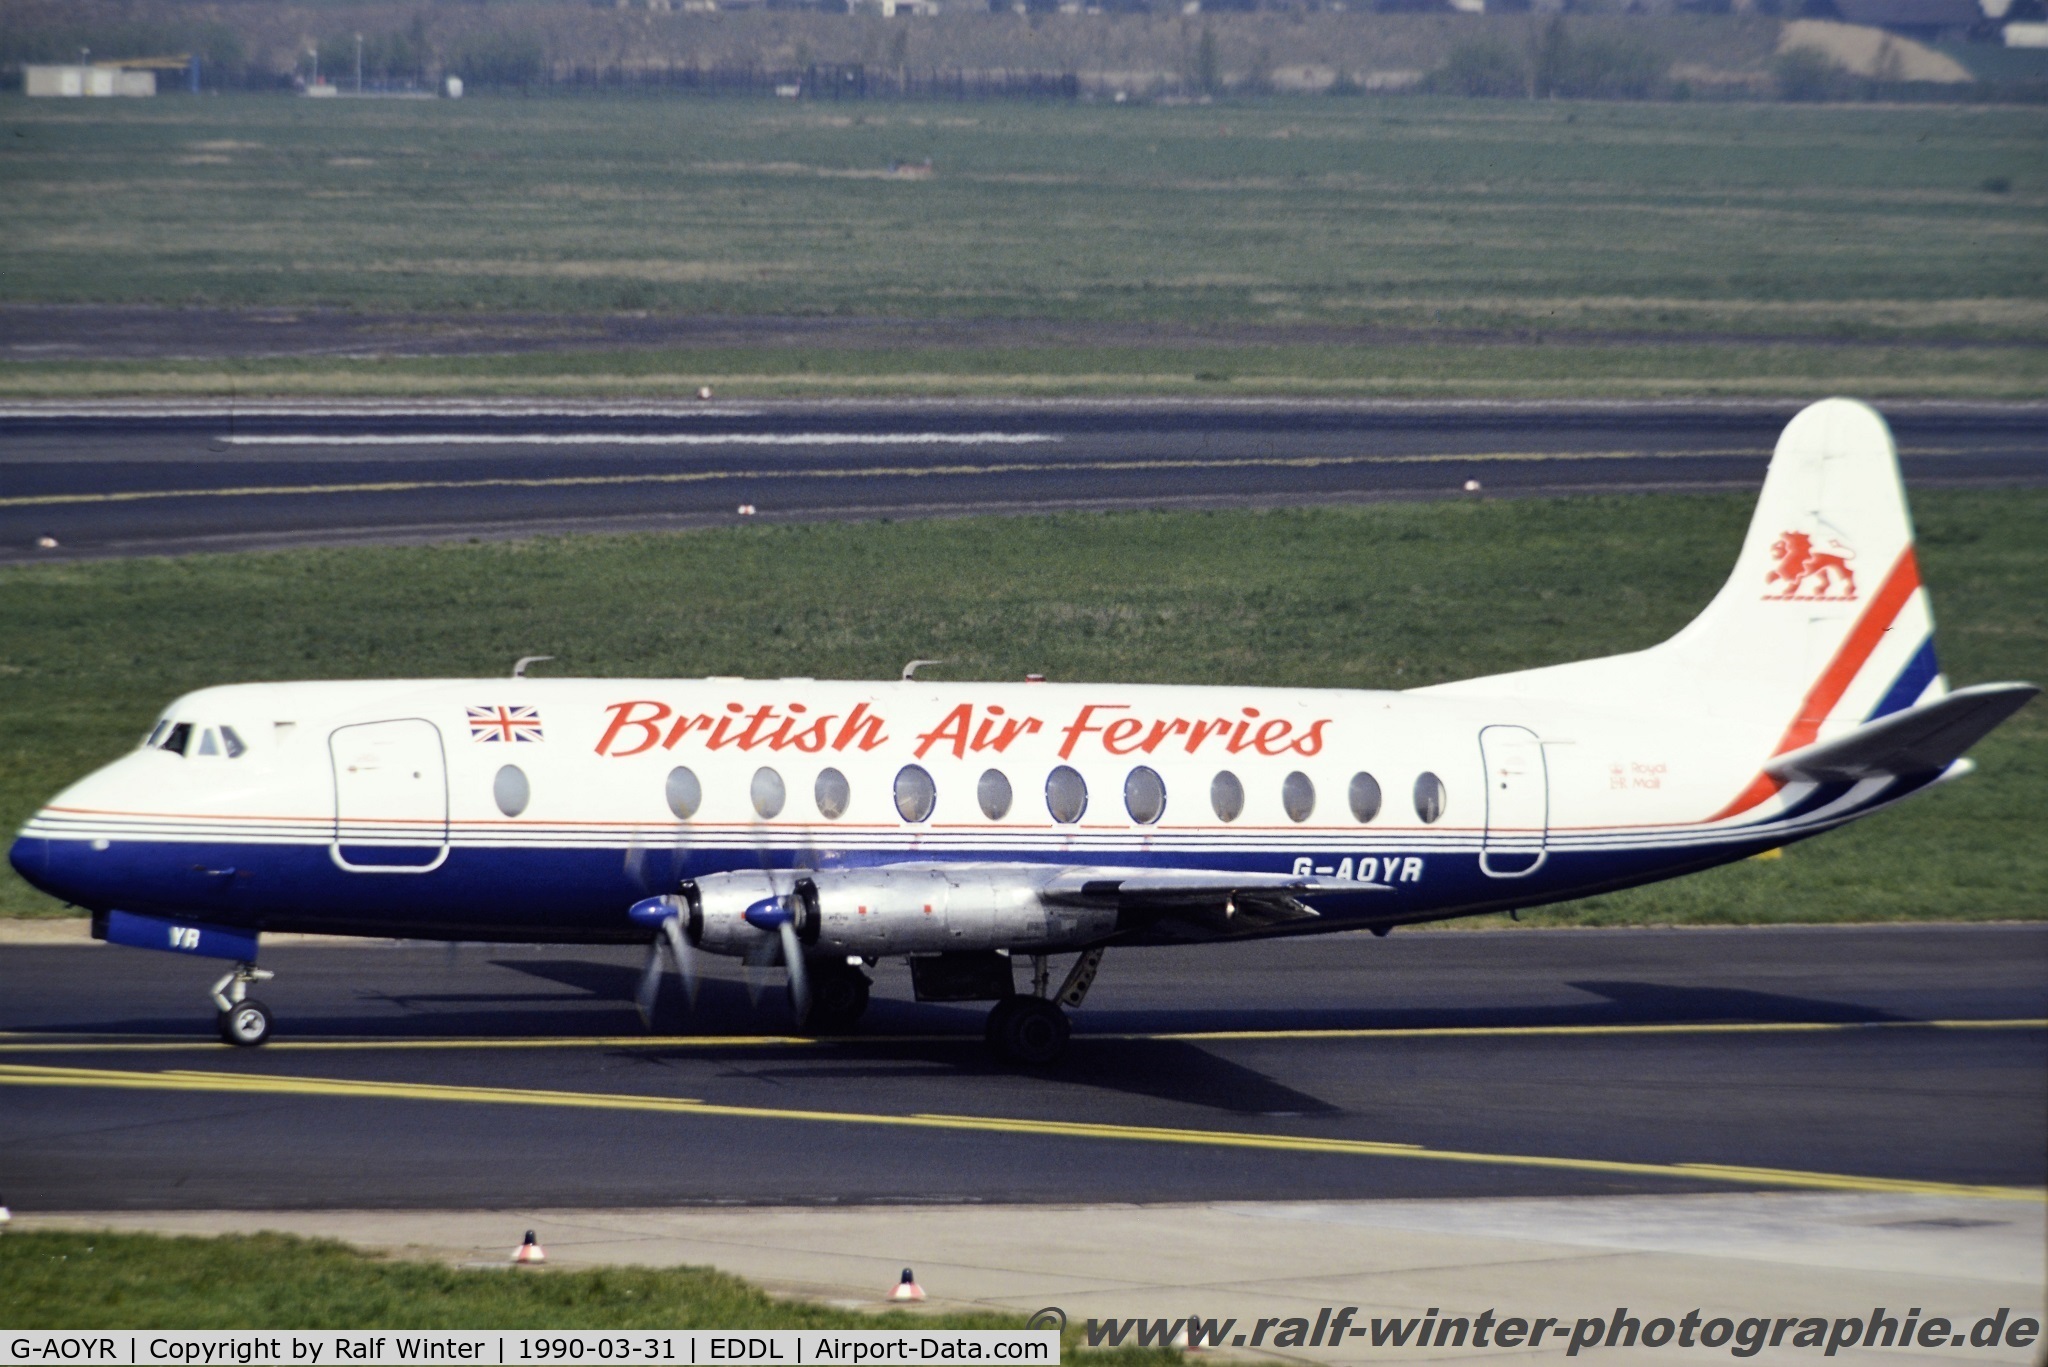 G-AOYR, 1958 Vickers Viscount 806 C/N 266, Vickers Viscount V.806 - BAF British Air Ferries - G-AOYR - 31.03.1990 - DUS